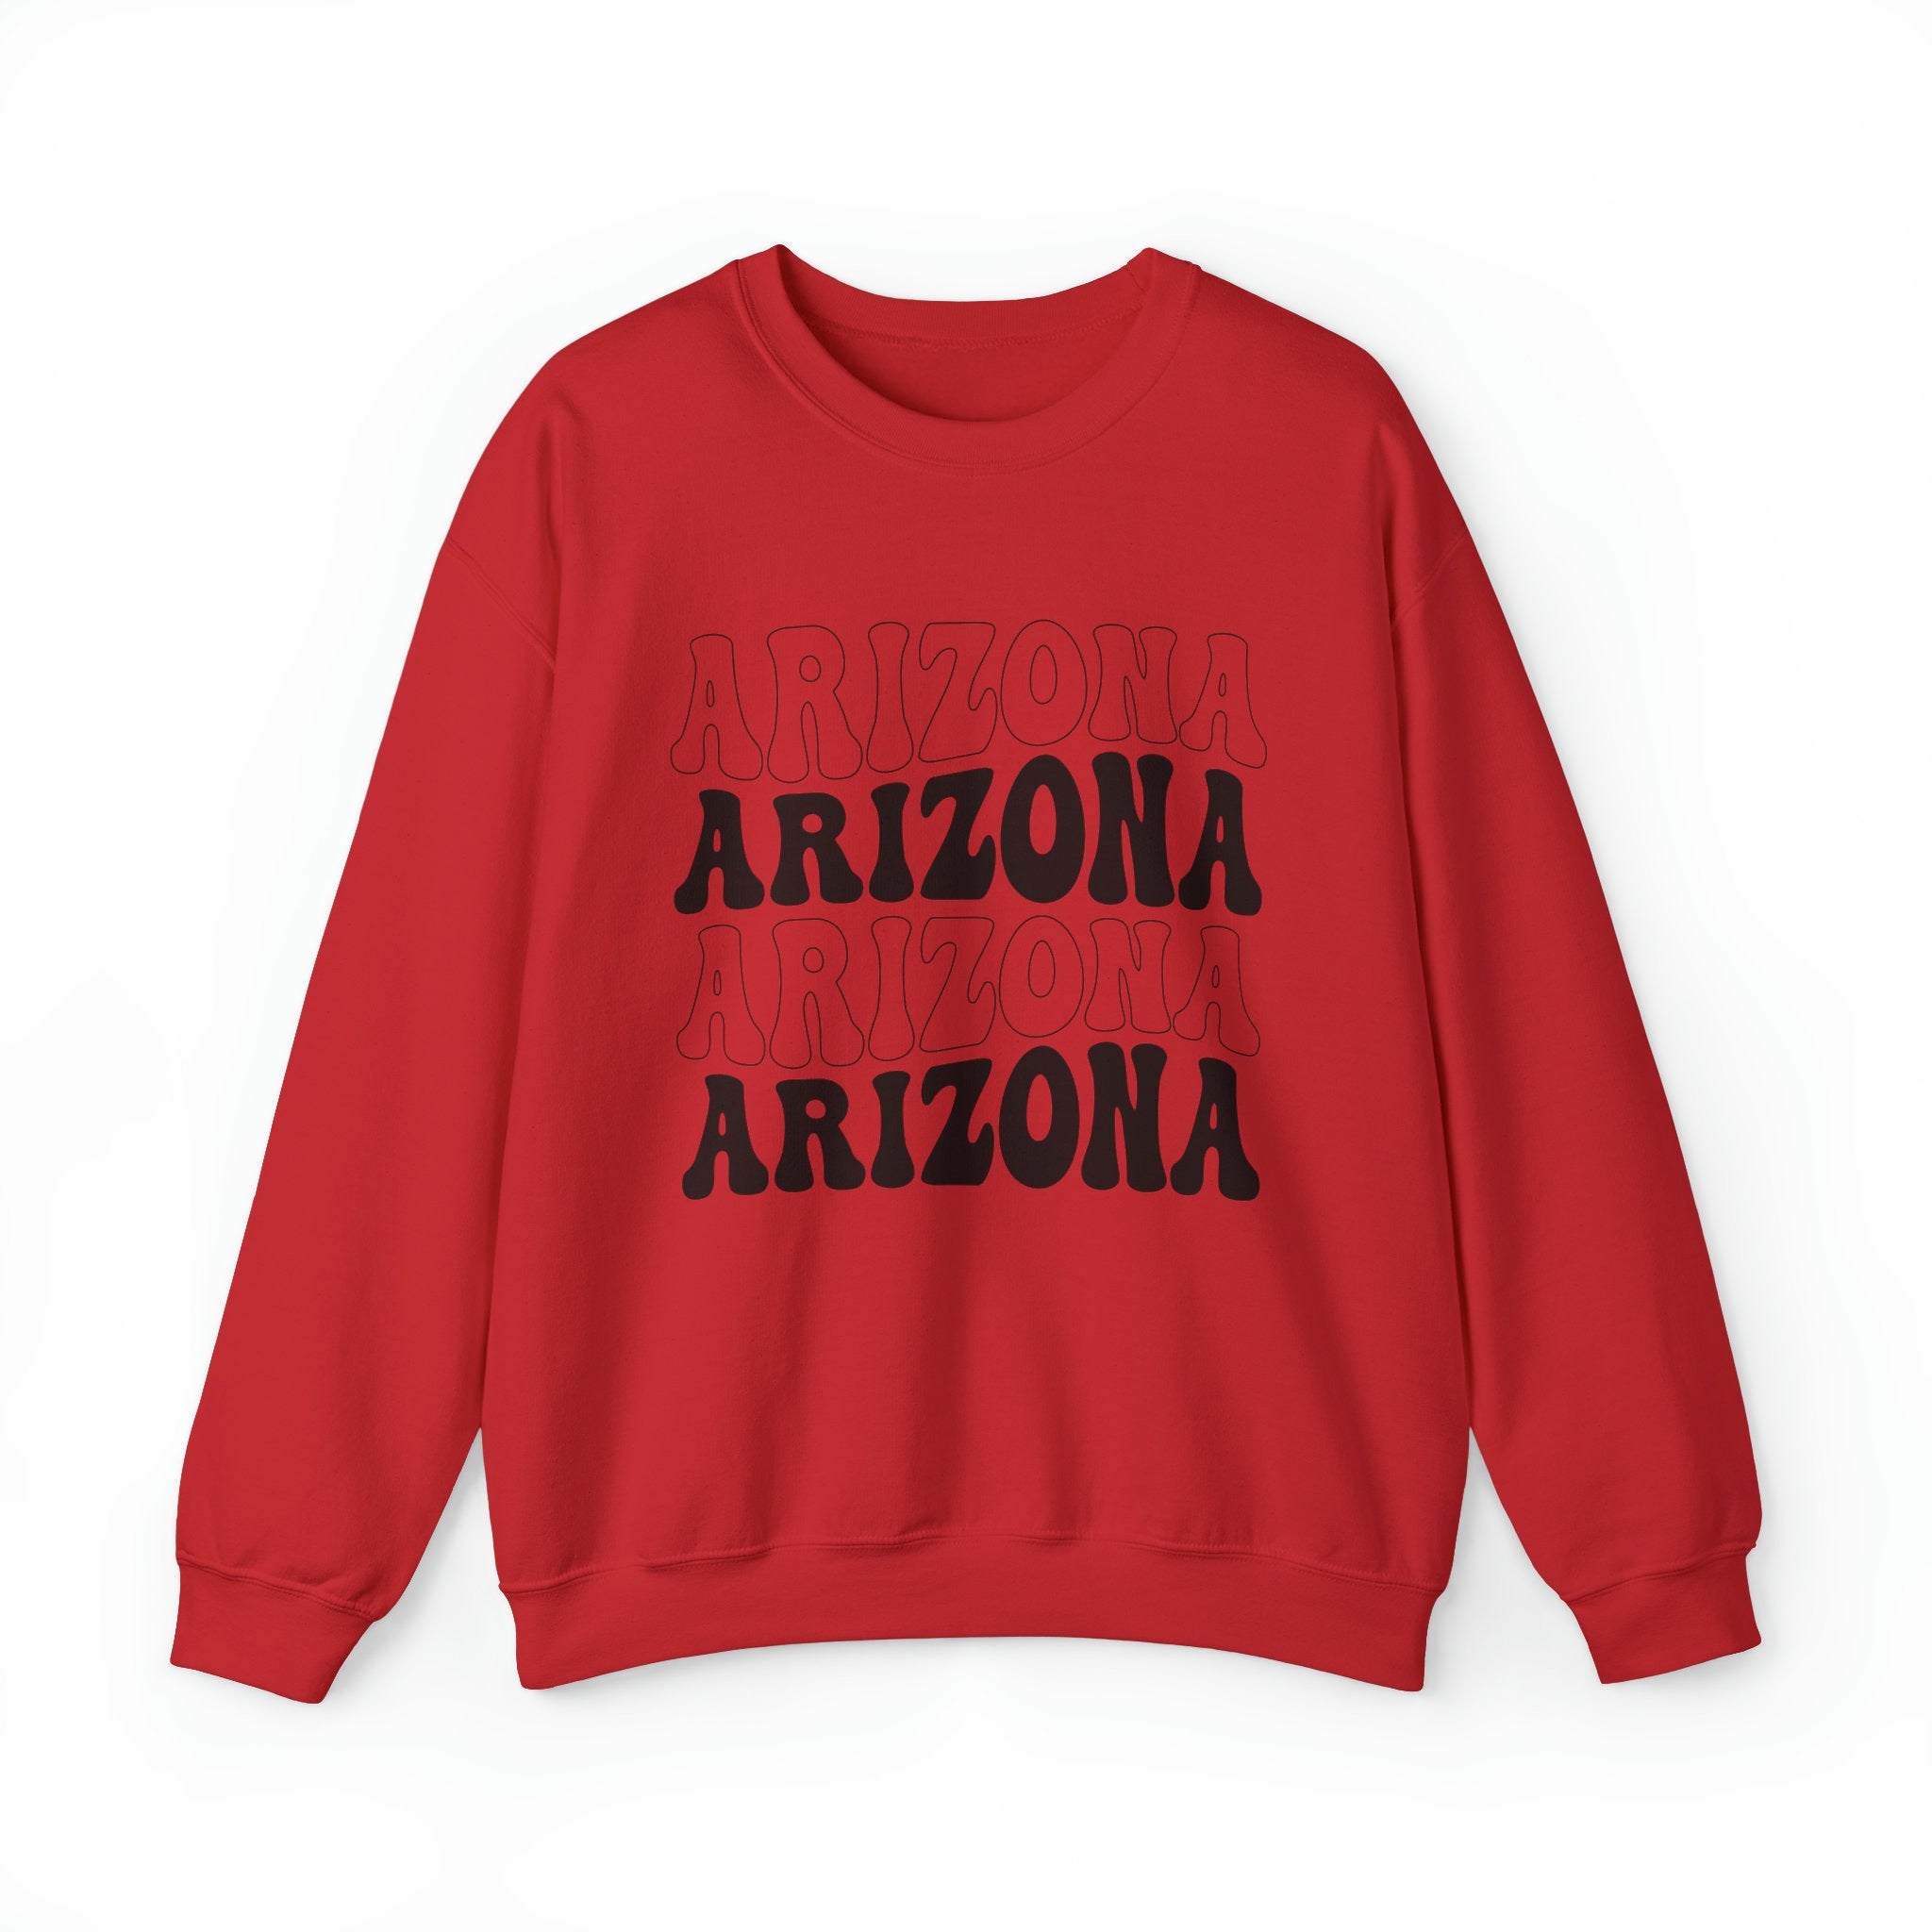 Arizona Football Sweatshirt, Arizona Wildcat Sweatshirt, Retro Arizona Sweatshirt, Arizona Varsity Sweatshirt, Go Arizona Cardinals